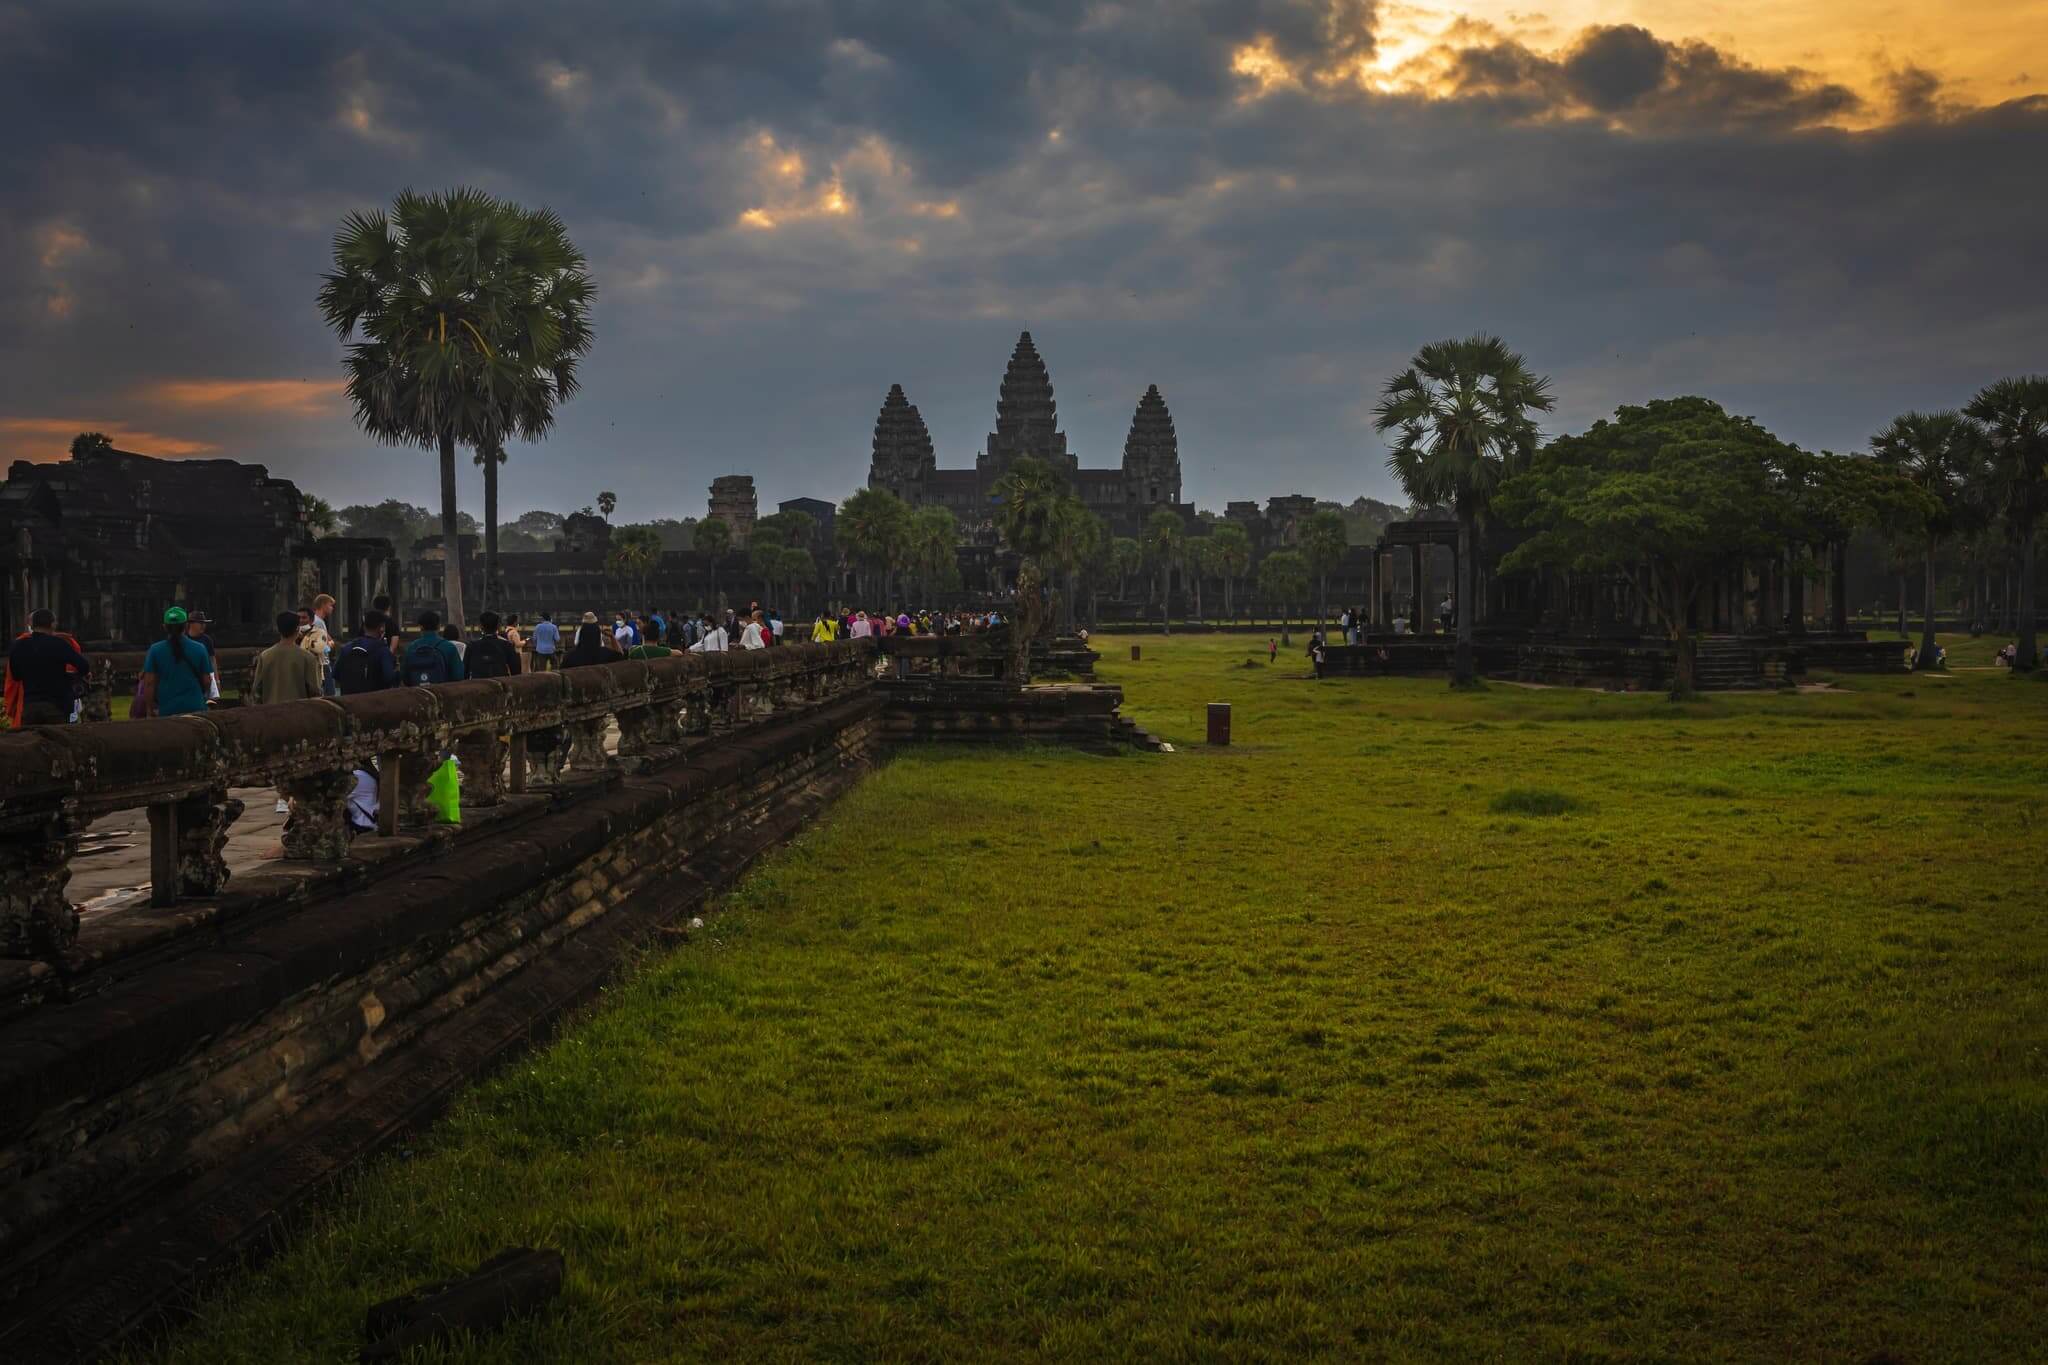 Best-of-Cambodia-8-days-Siem-Reap-Angkor-Wat-4.jpg